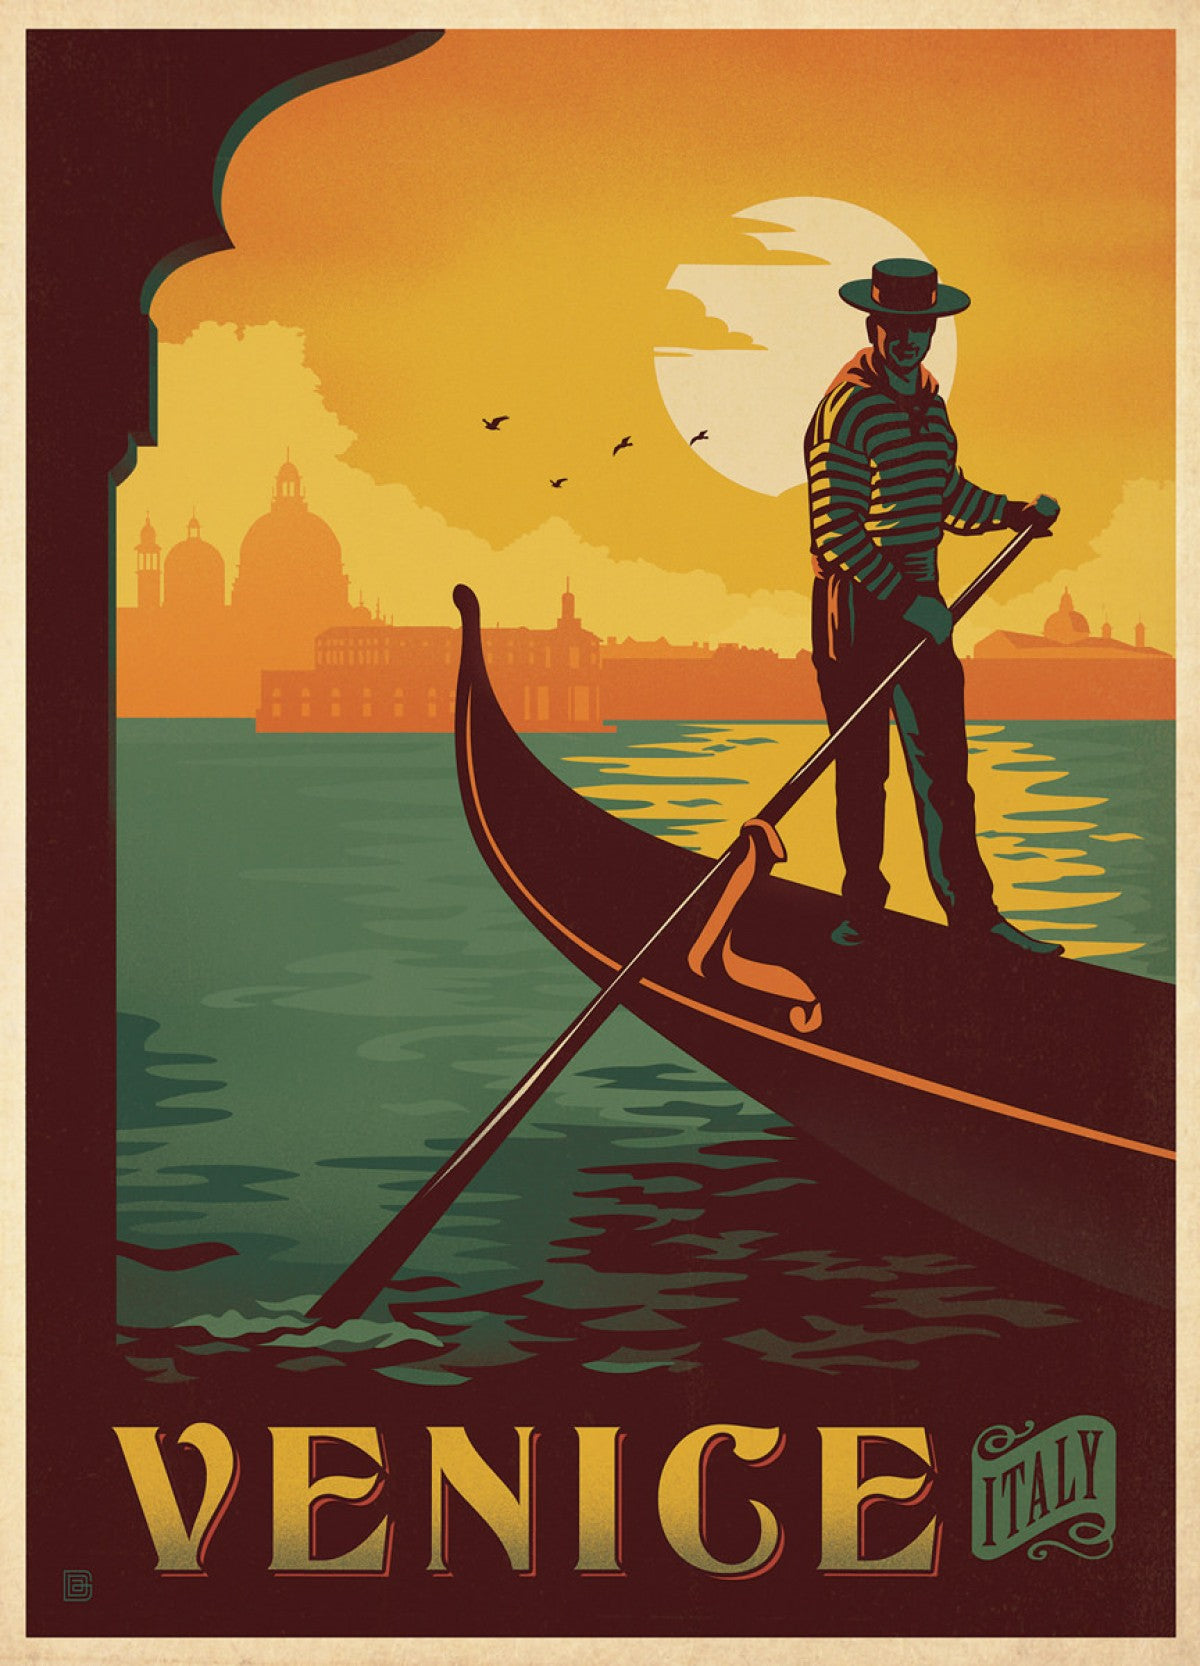 Venice Vintage Italian Poster